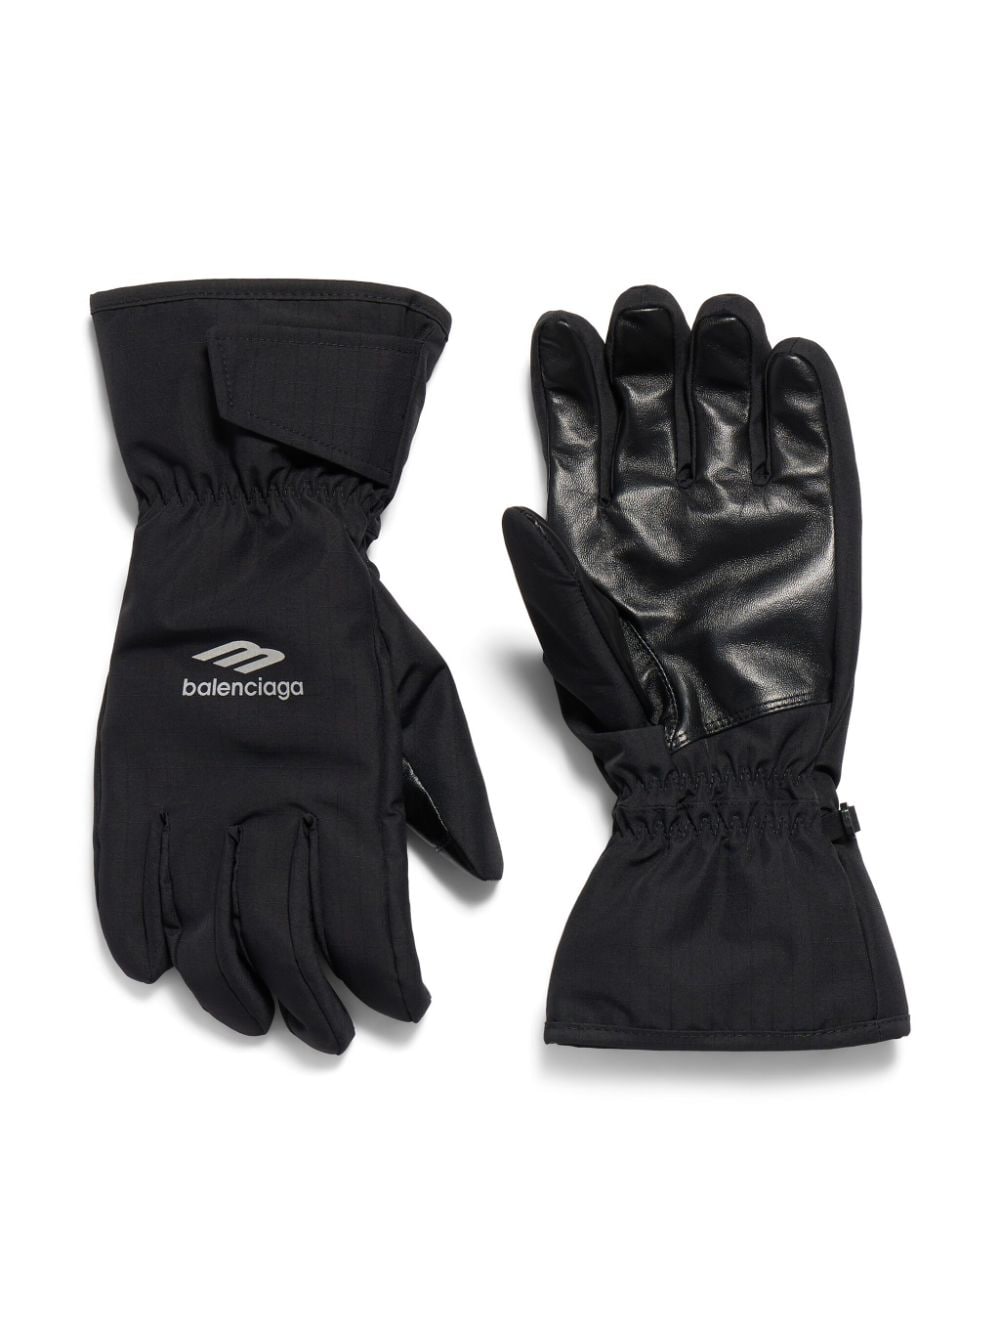 3B Sports Icon ski gloves<BR/><BR/>